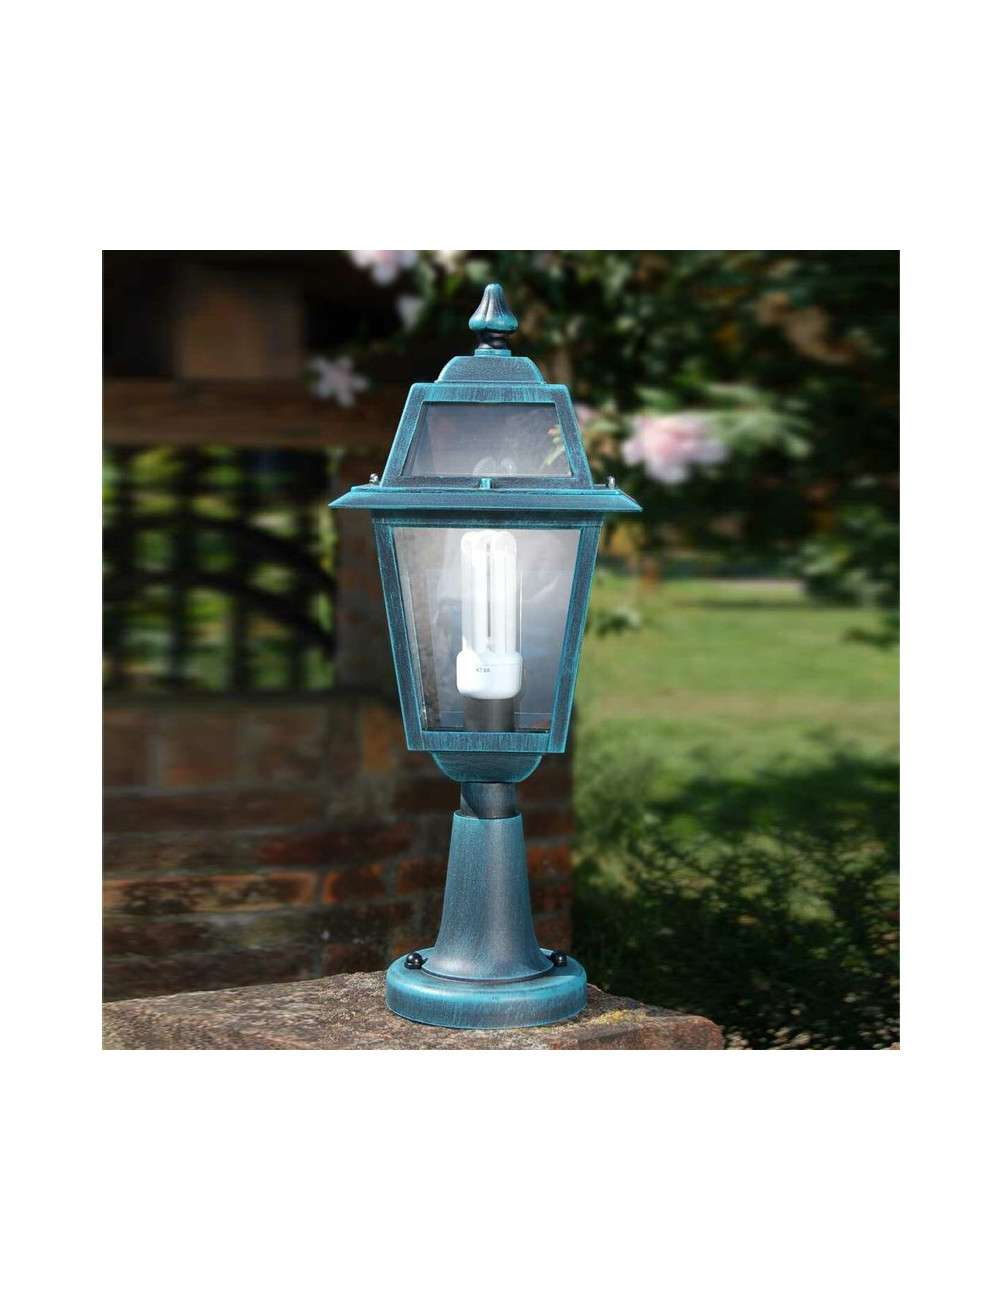 ARTEMIDE Classic Lantern Gate Blower Outdoor Garden Lighting